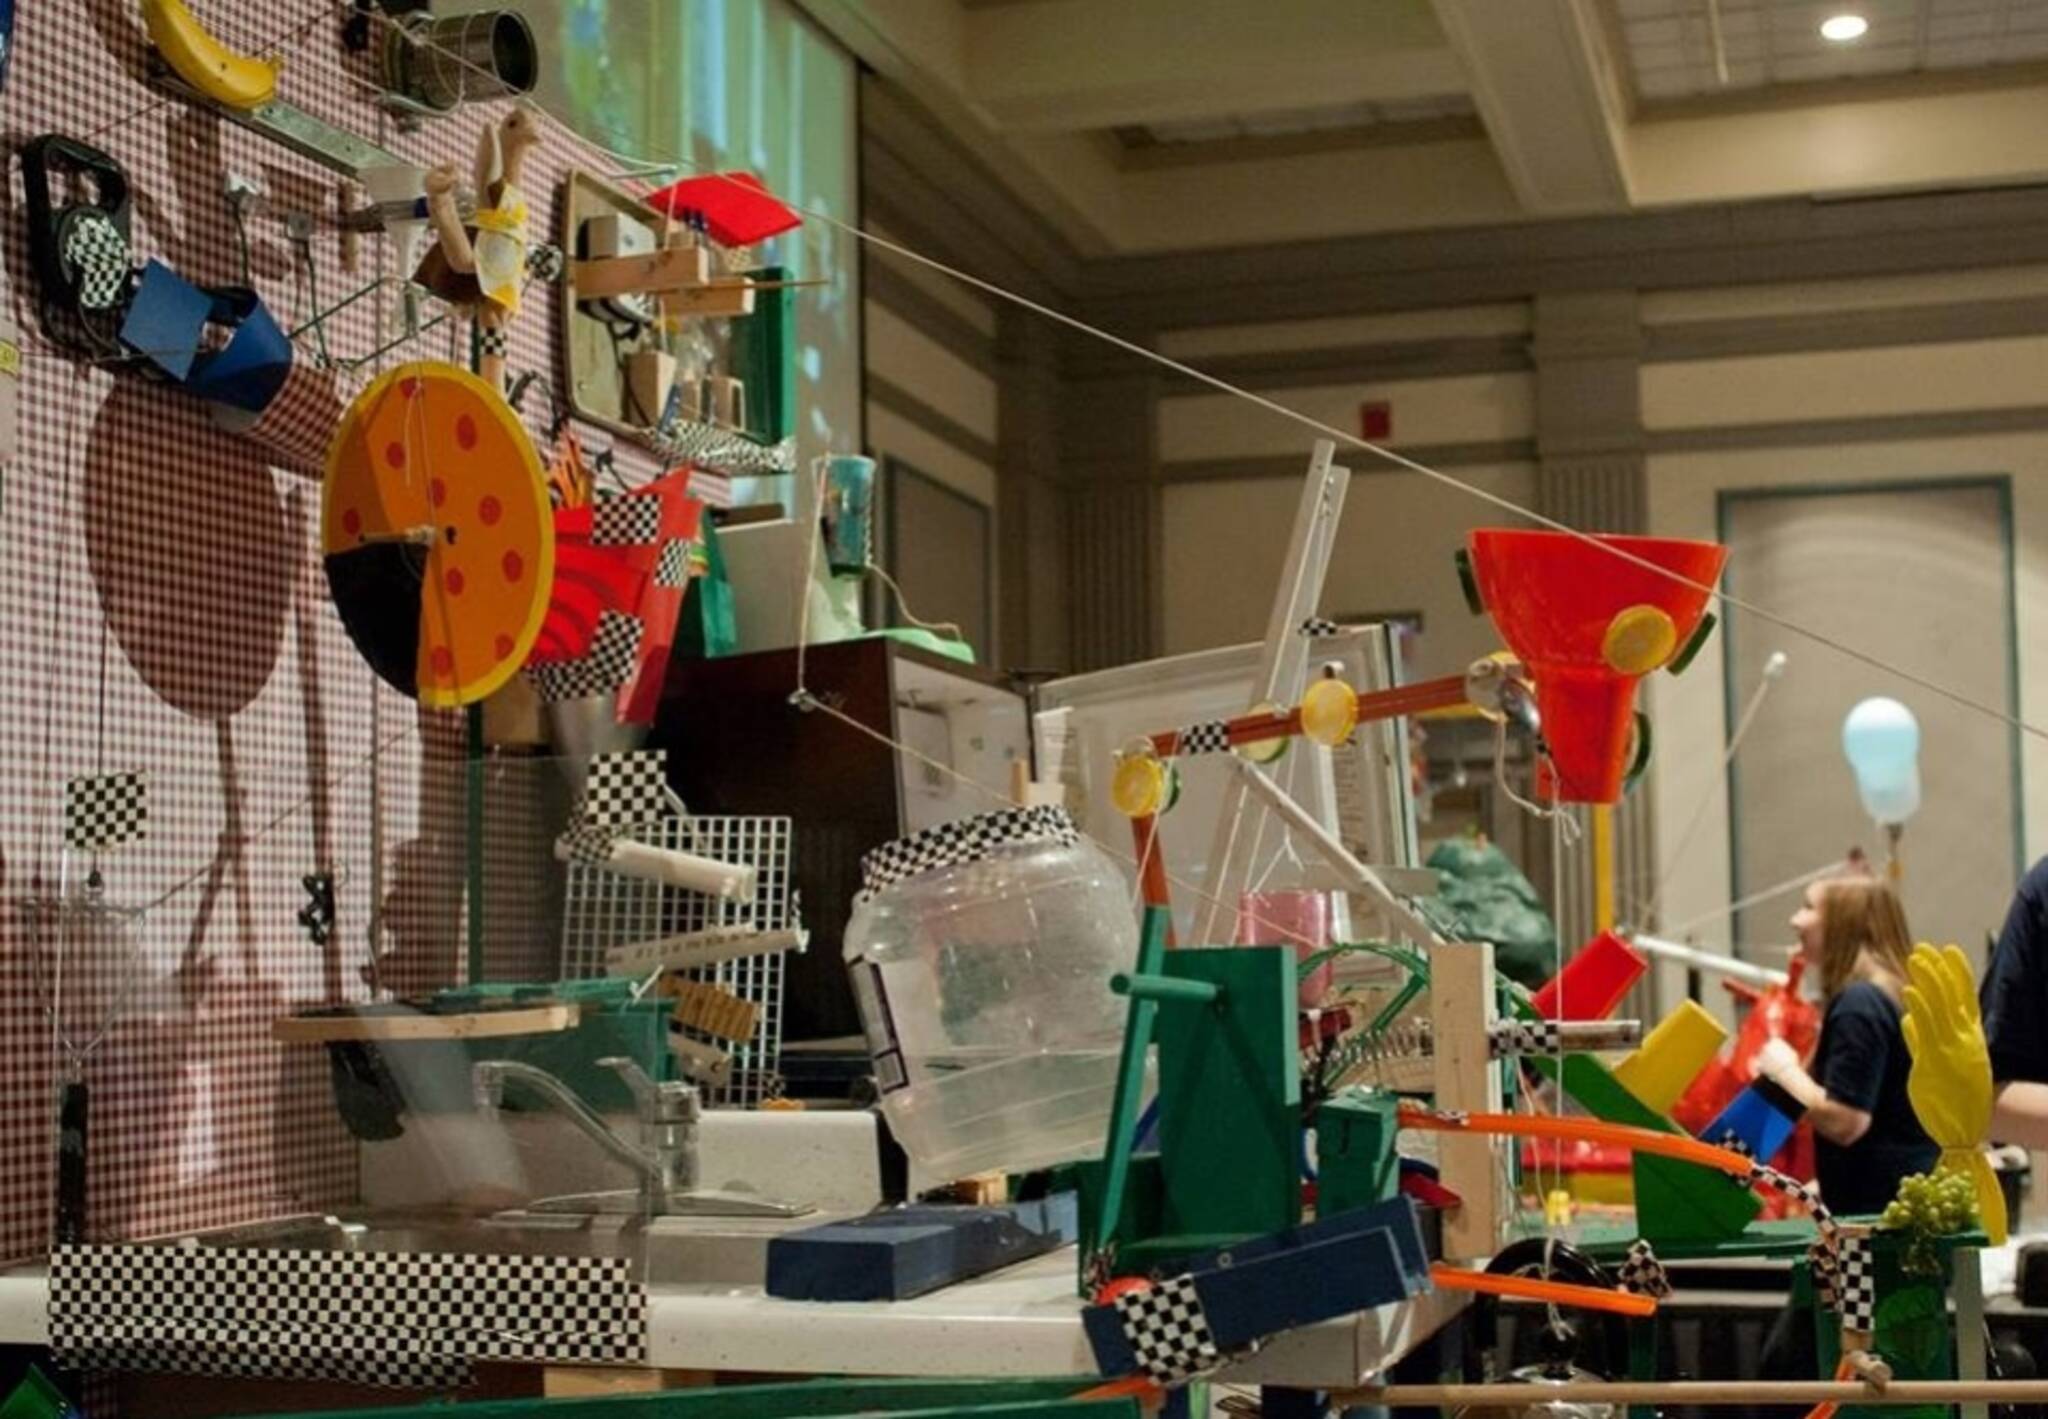 Do Rube Goldberg machines exist in the world?